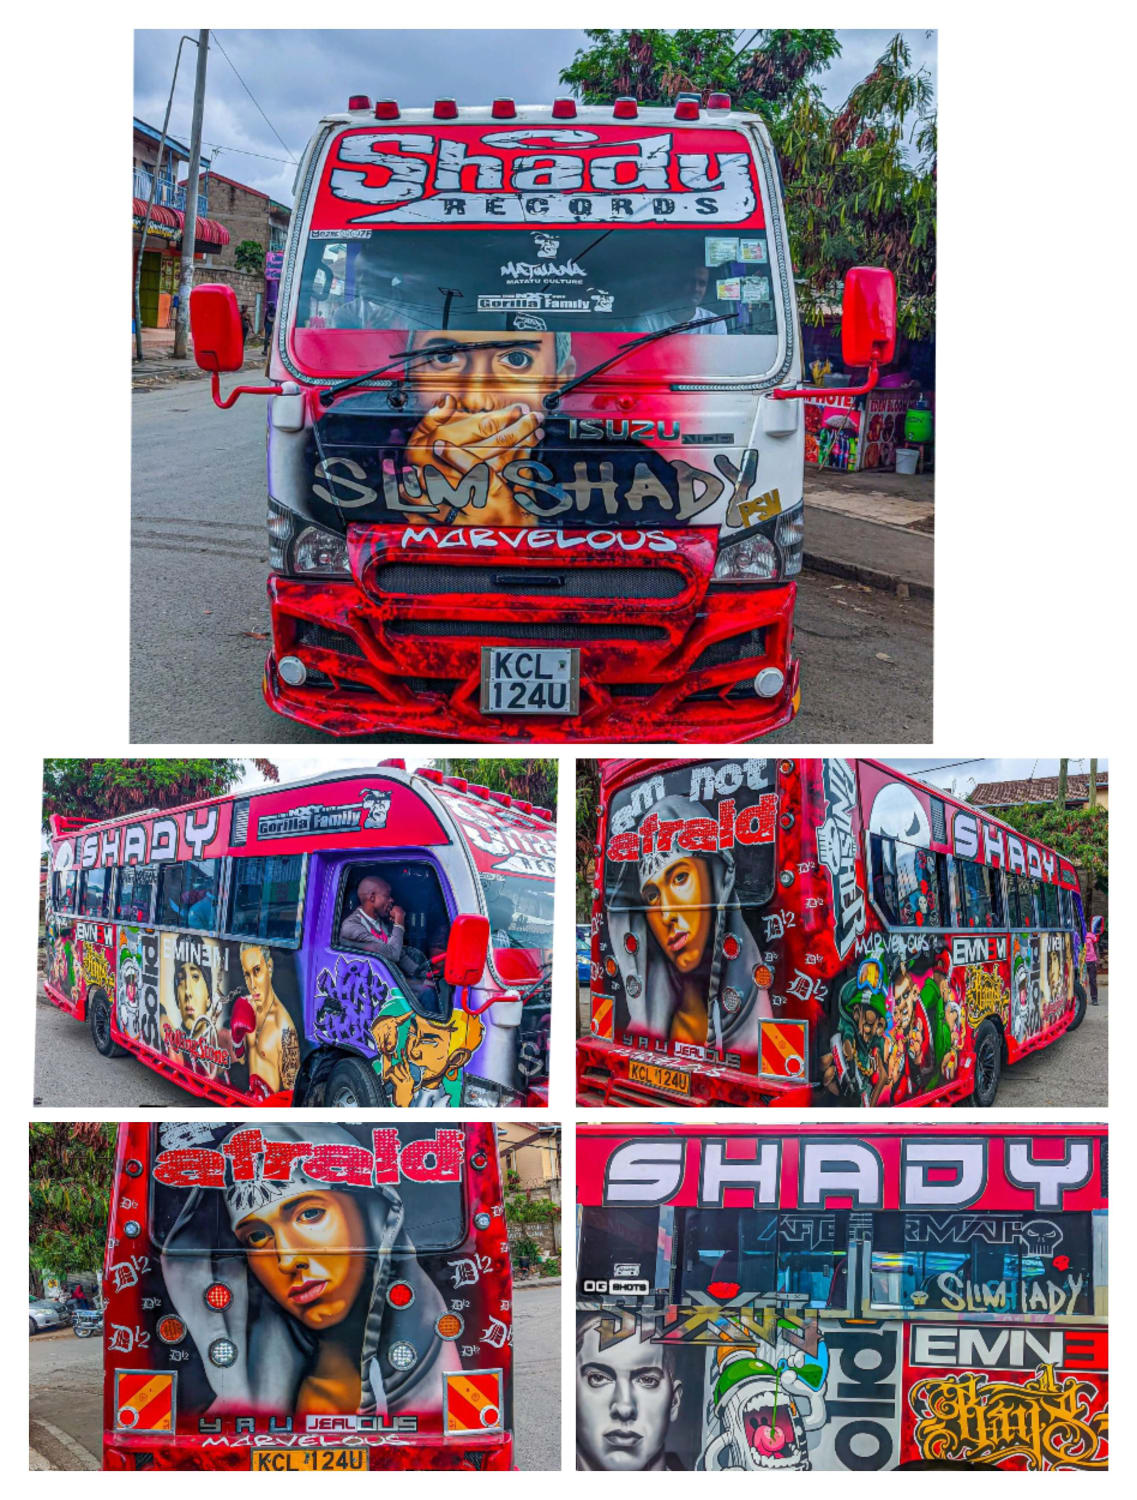 This Eminem fanatic bus spotted in Nairobi, Kenya. PC: @_ogshots_ on Insta